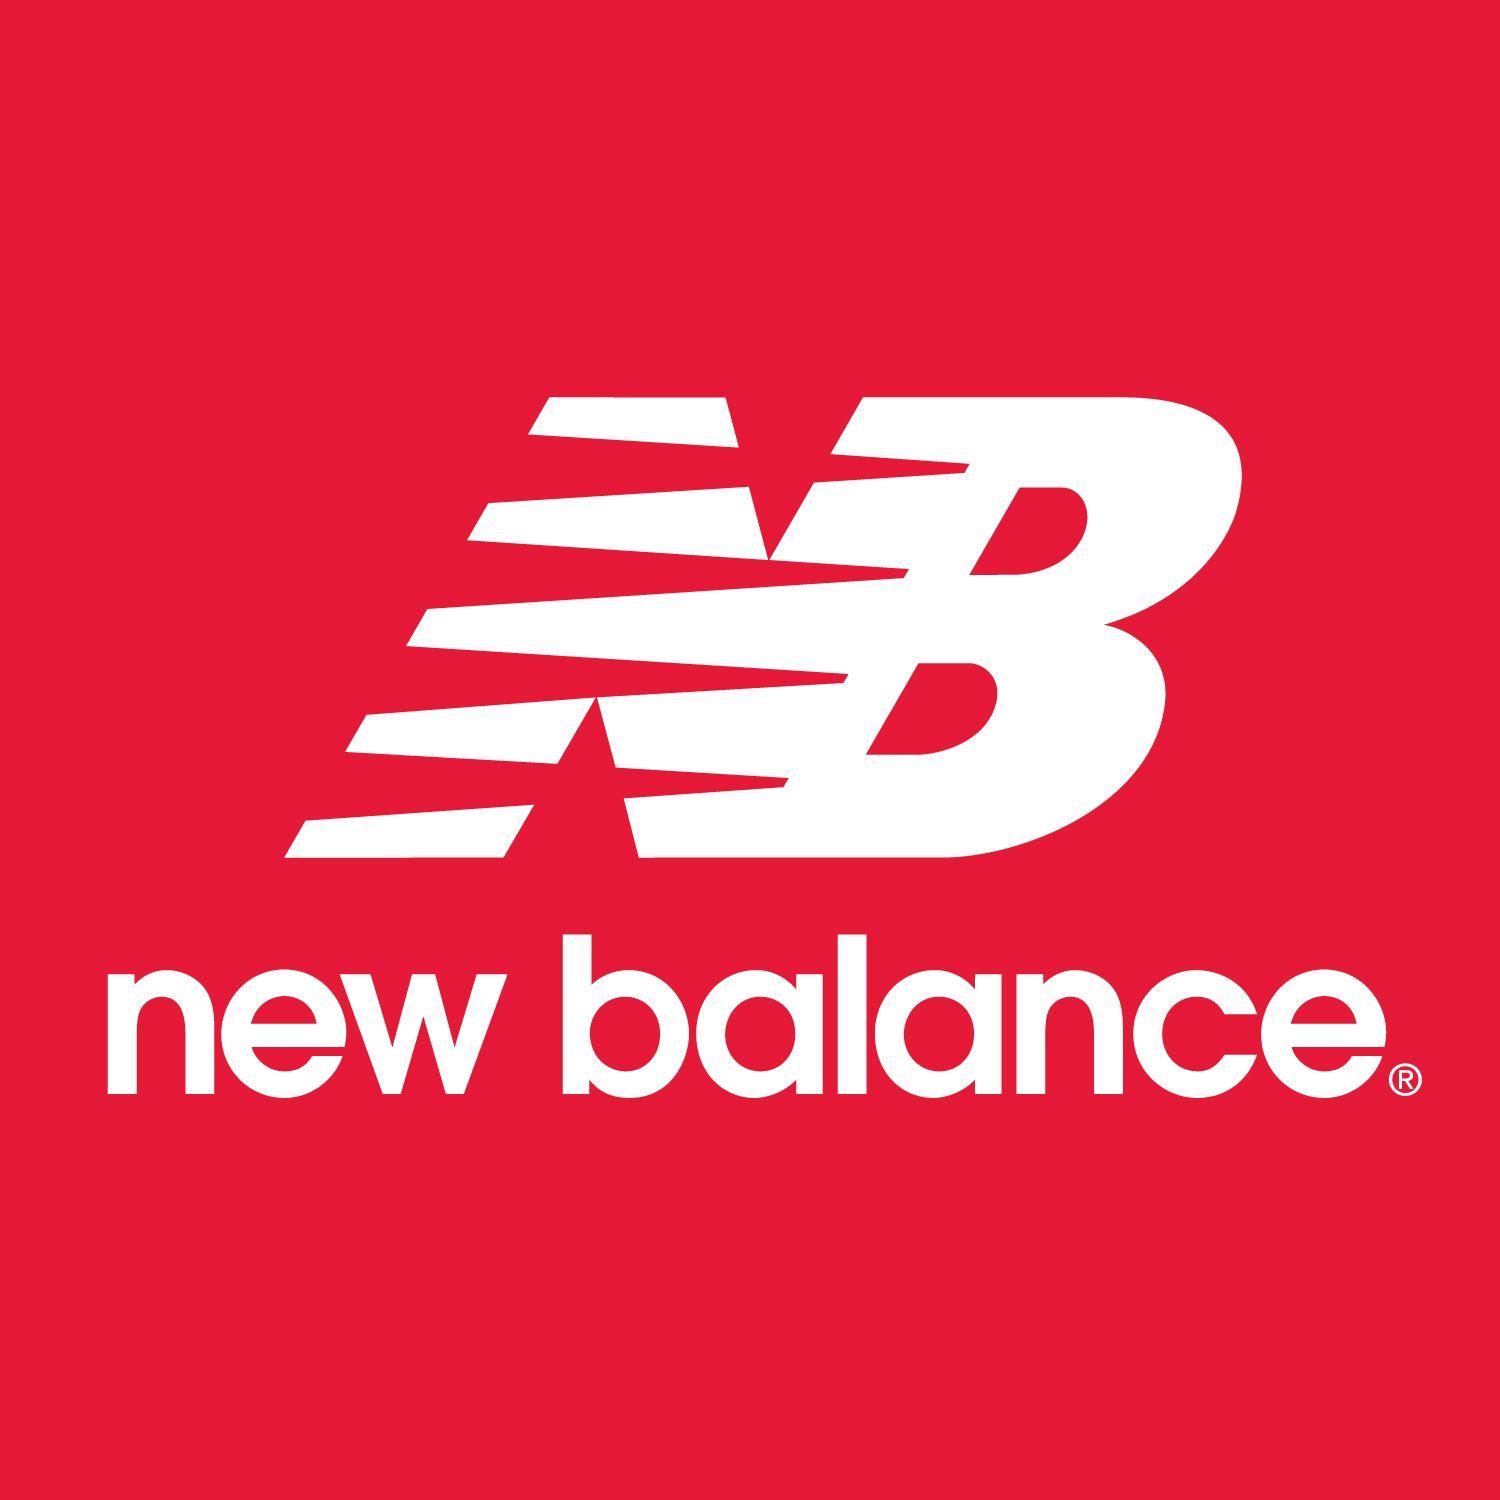 NB Logo - File:NB Stckd logo.jpg - Wikimedia Commons